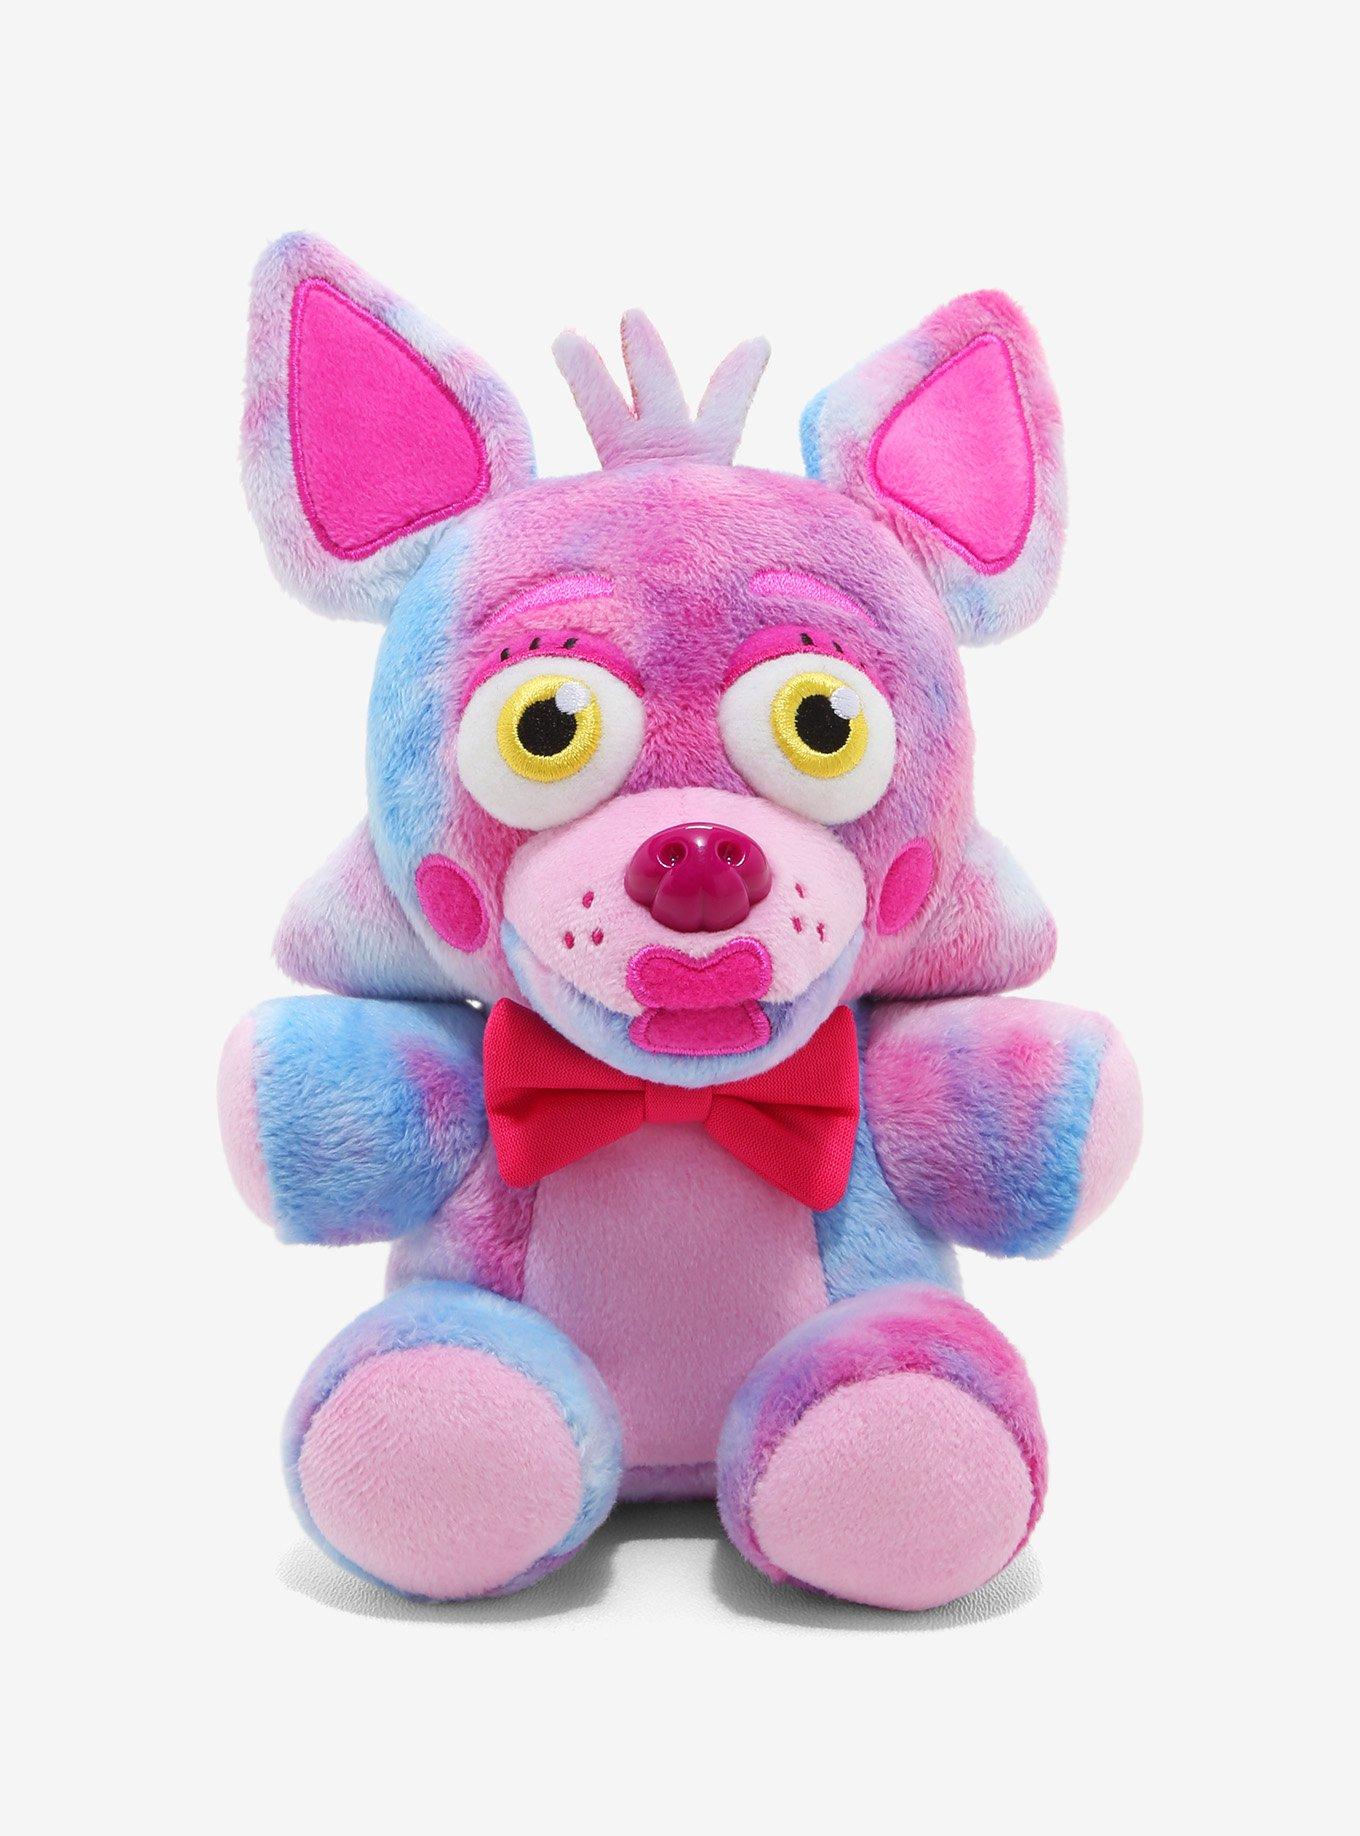 Funko Plush: Five Nights at Freddy's Tie-Dye - Foxy plush toy